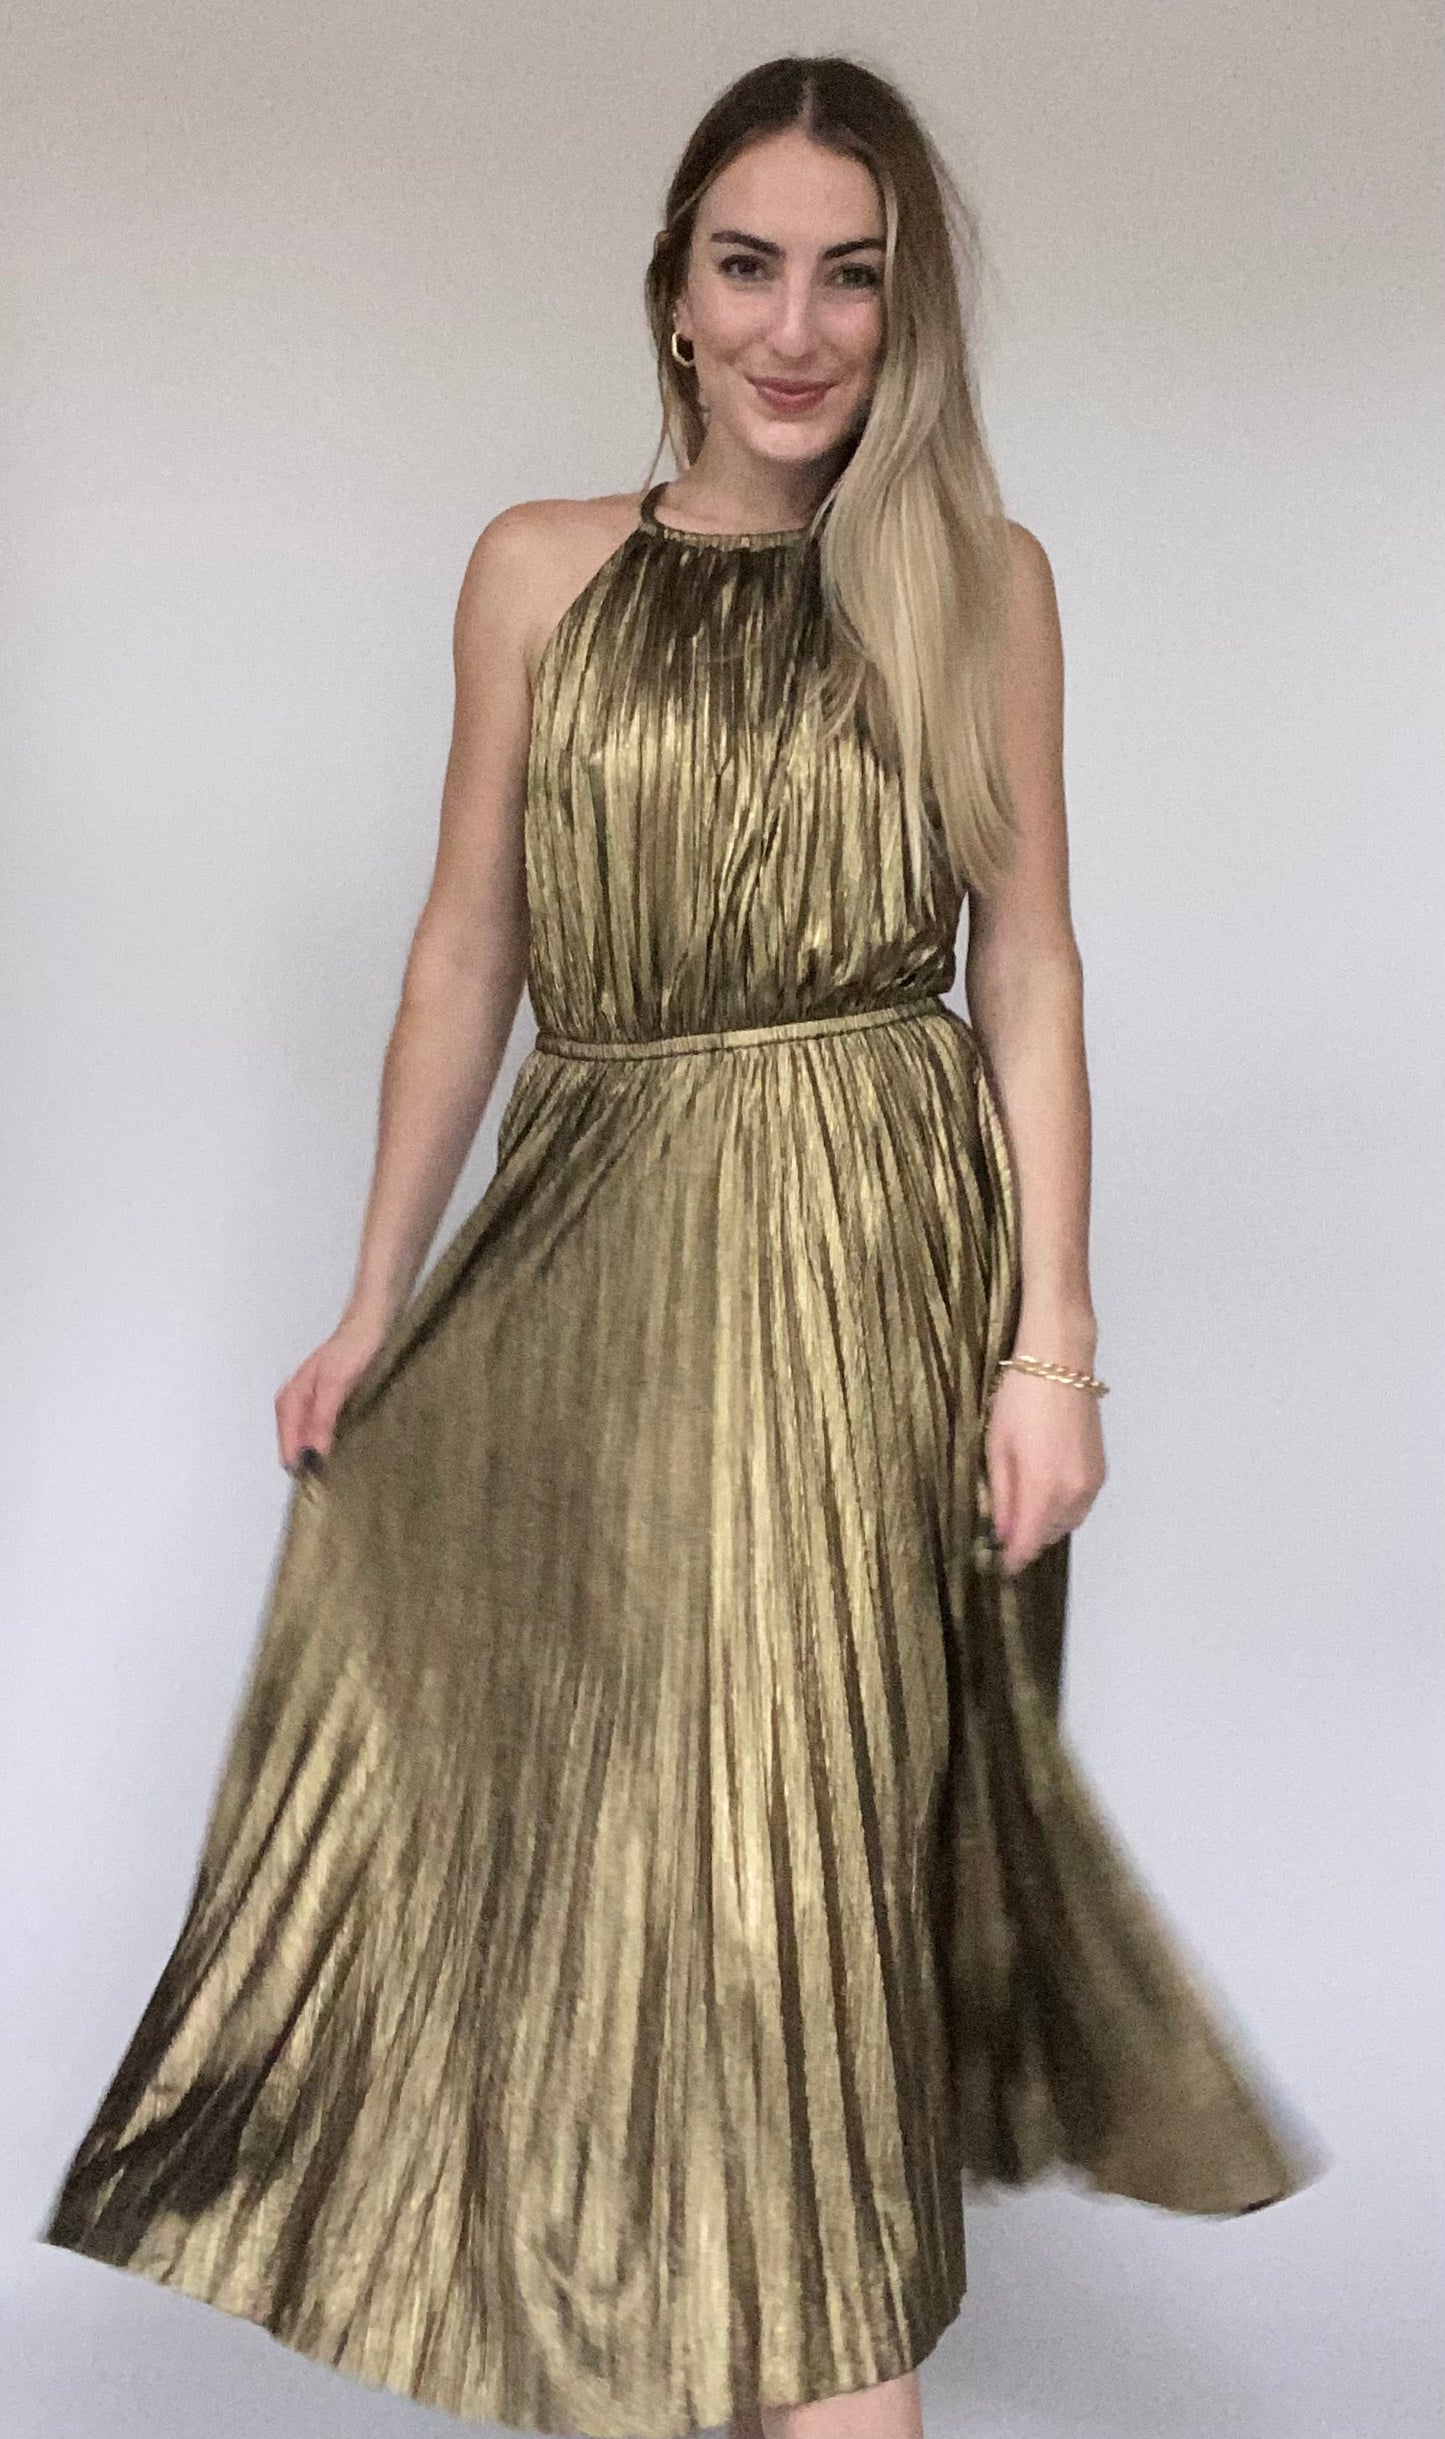 Gold Rush Dress